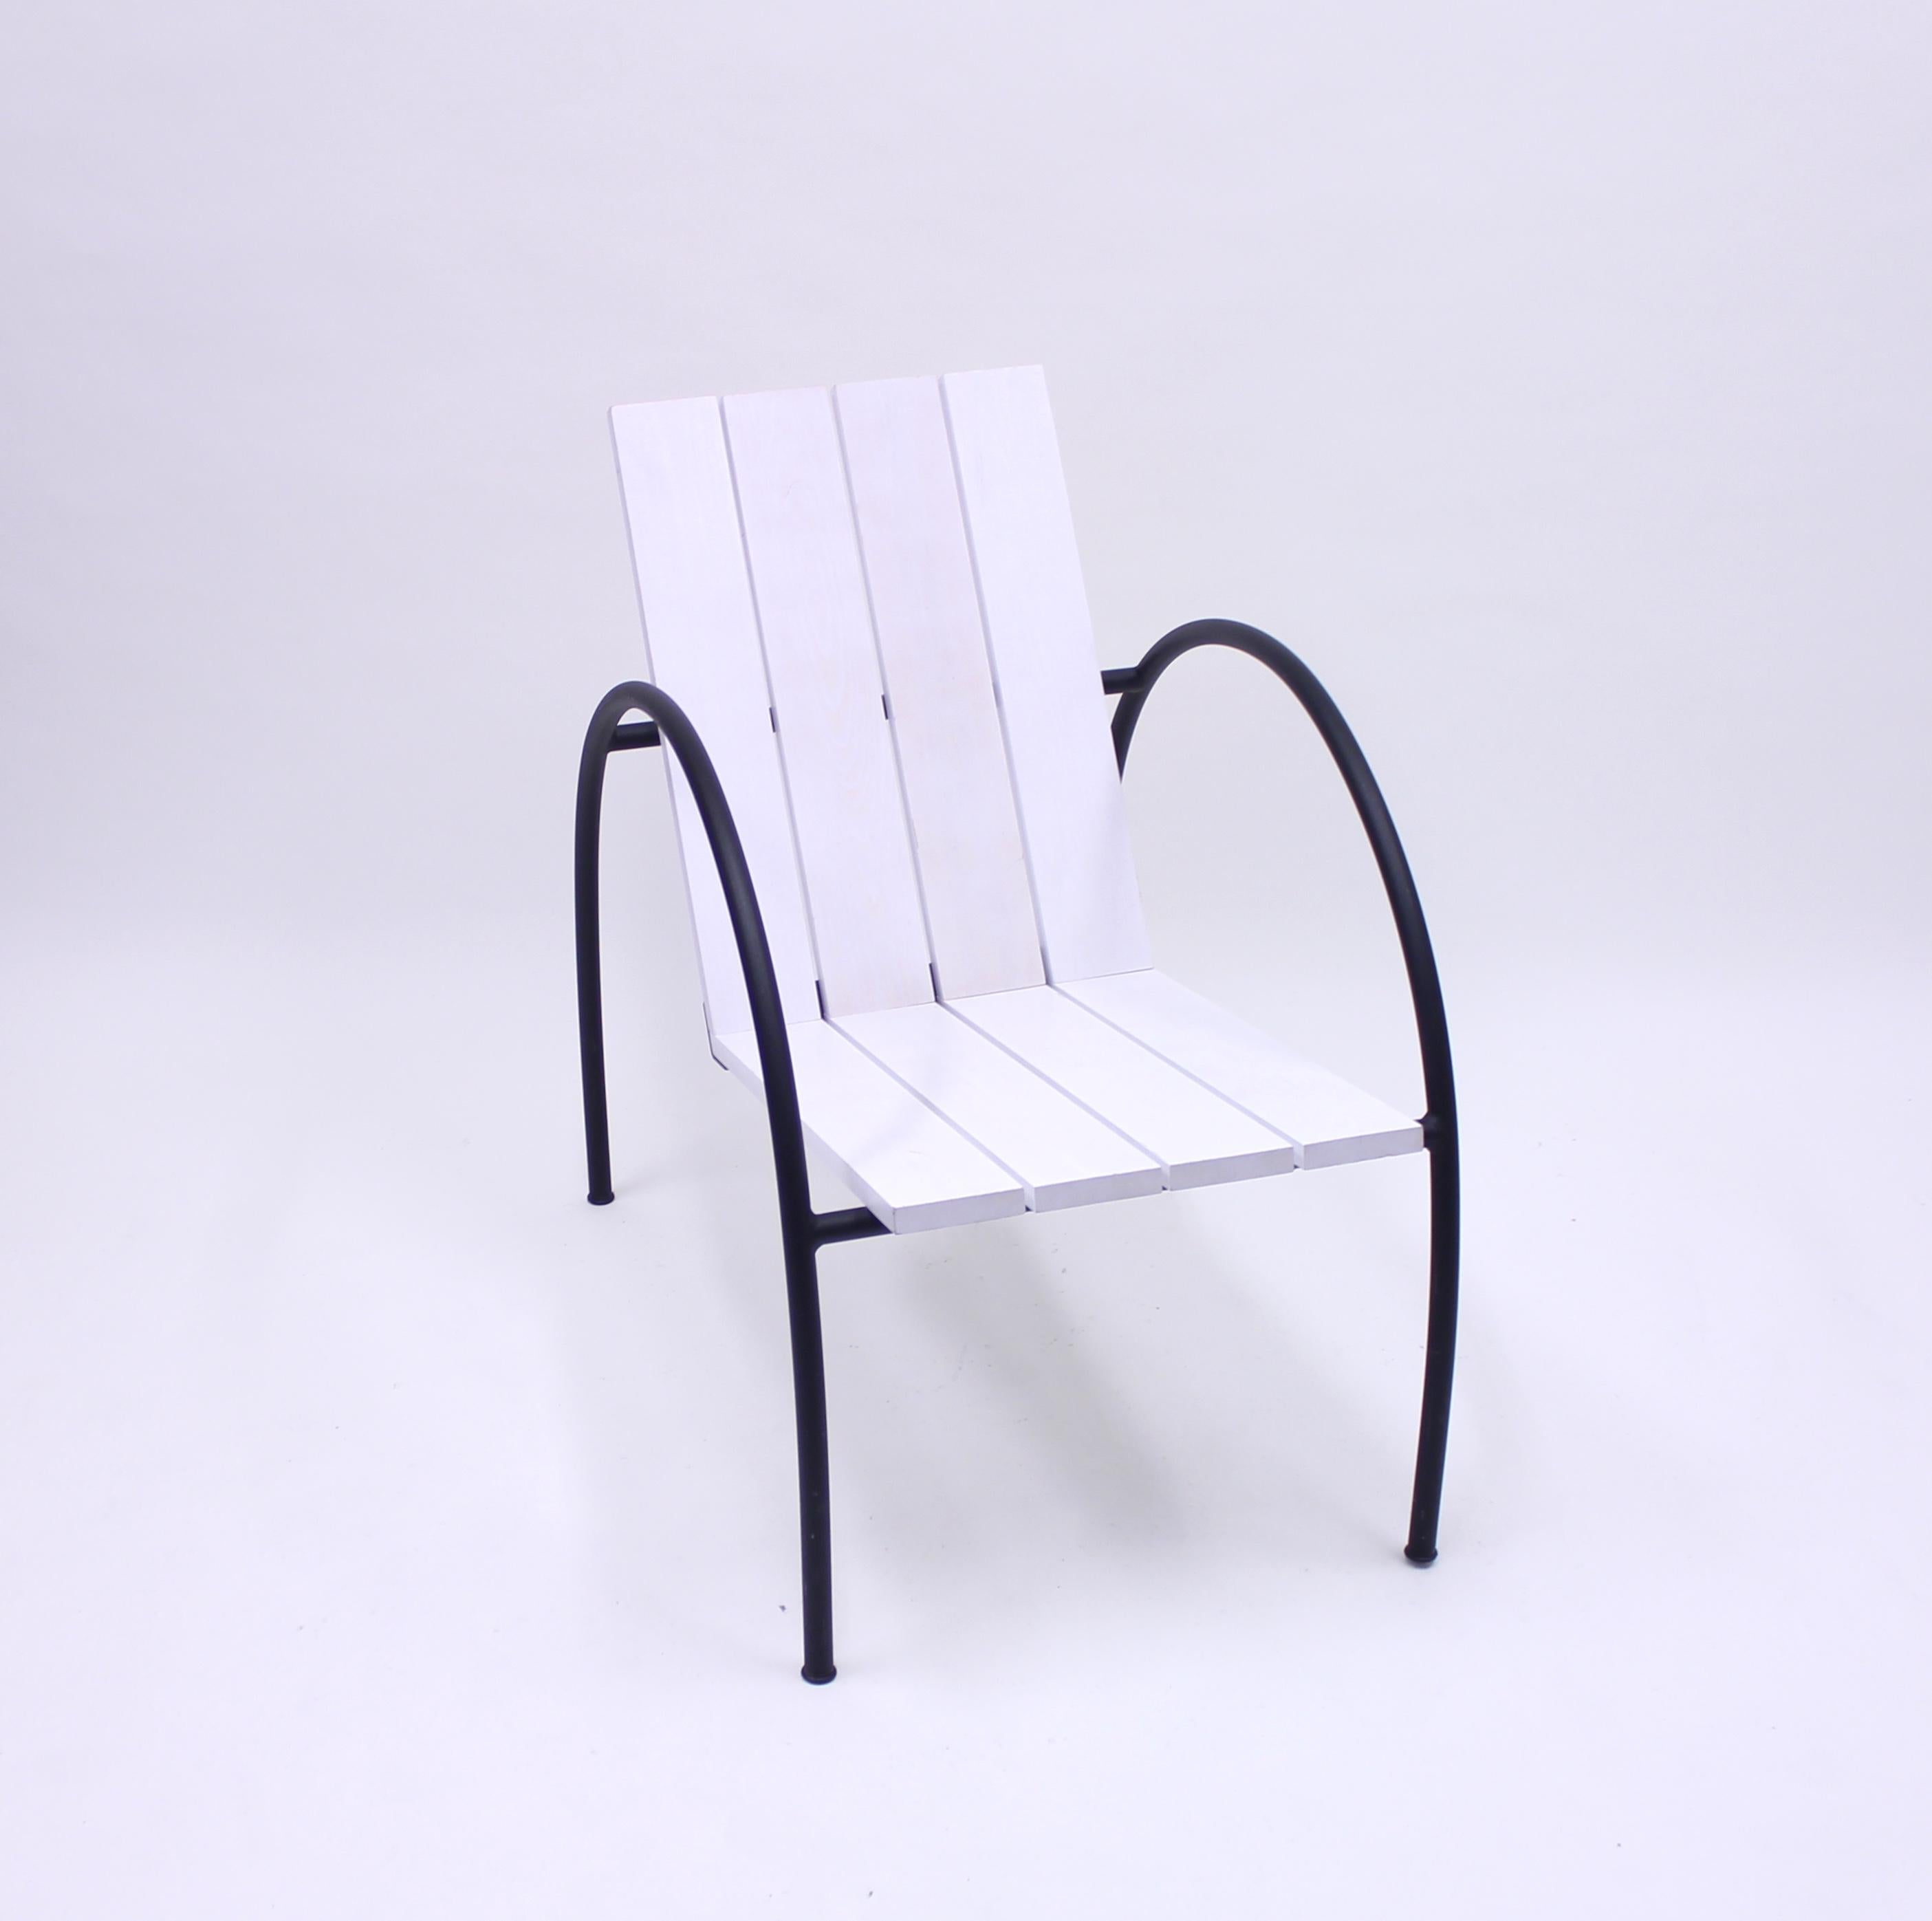 Metal Jonas Bohlin, Liv Chair, Jonas Bohlin Design, 1997